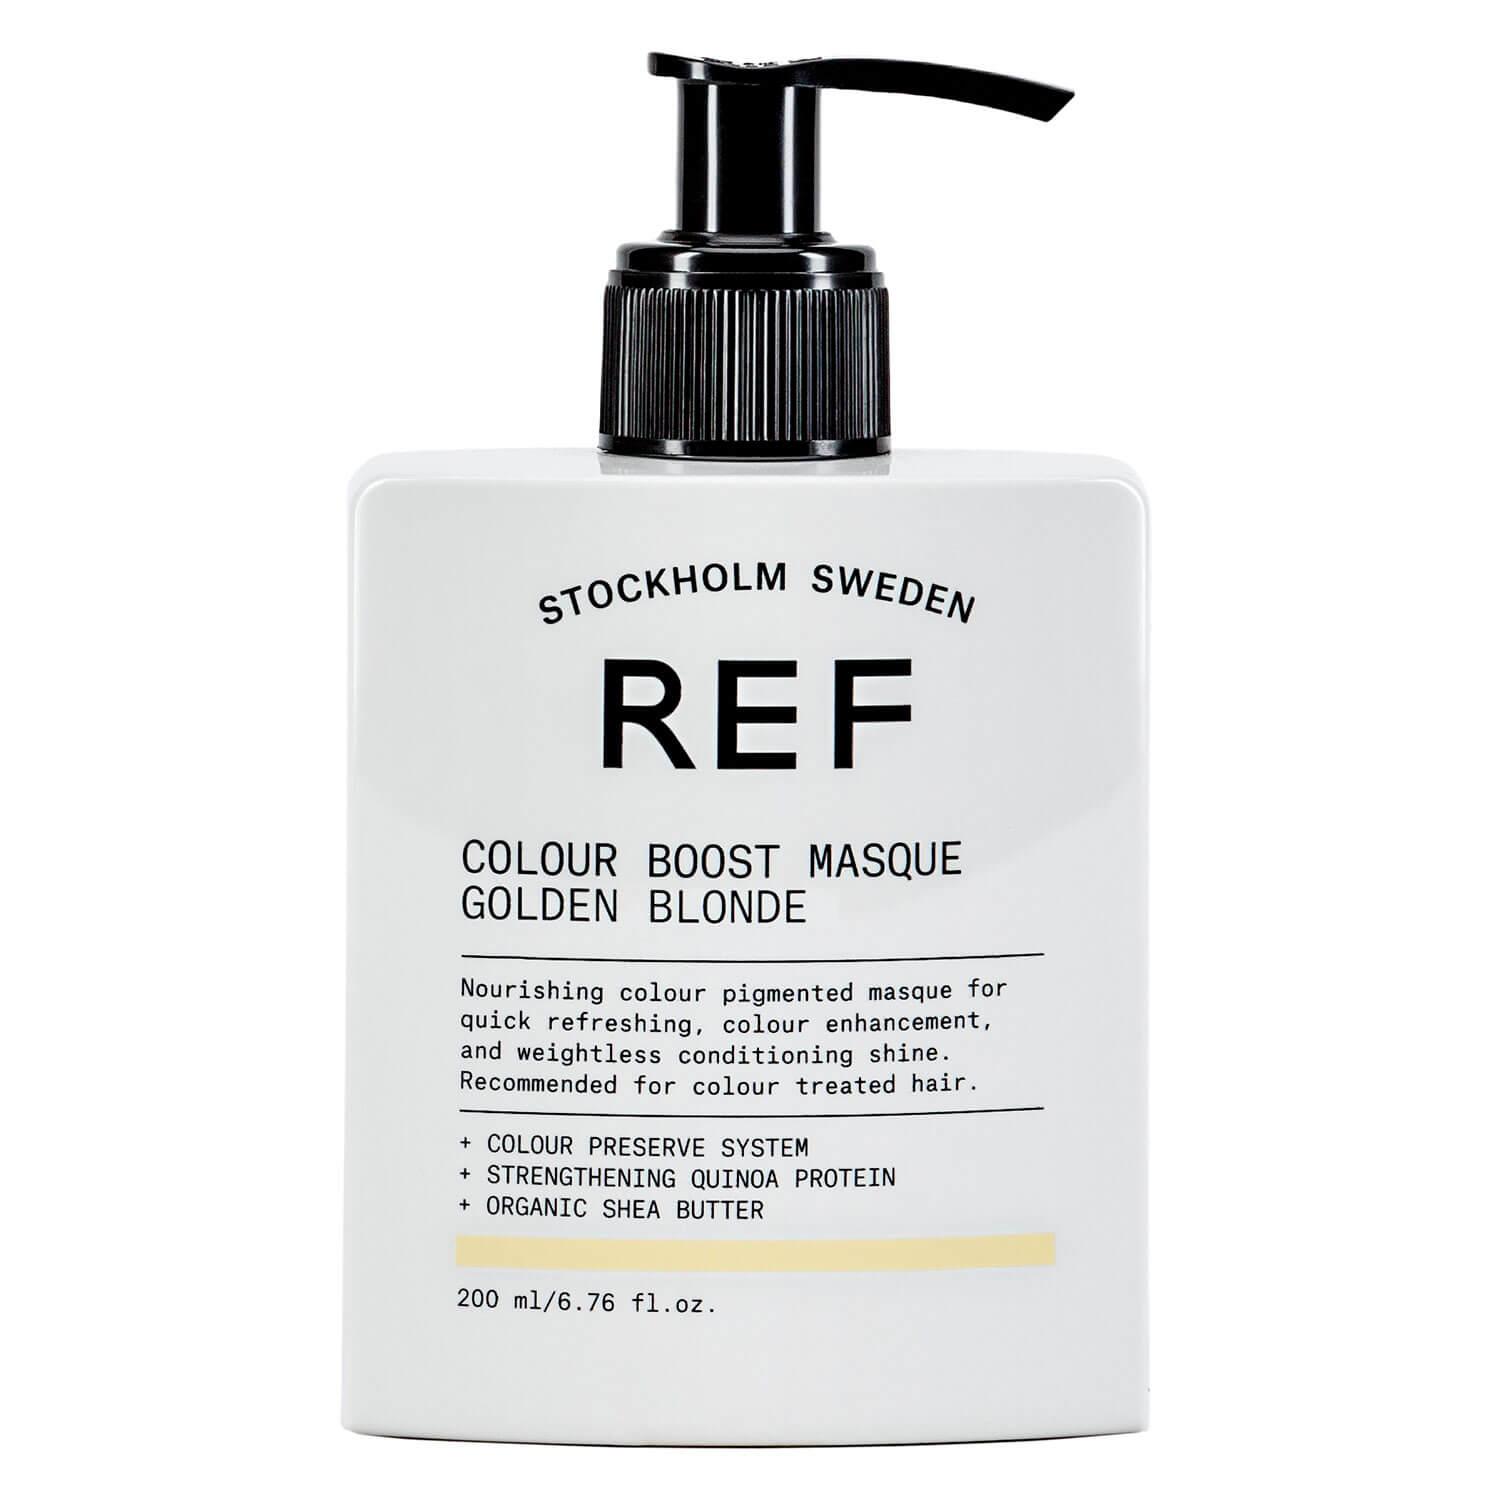 REF Treatment - Colour Boost Masque Golden Blonde